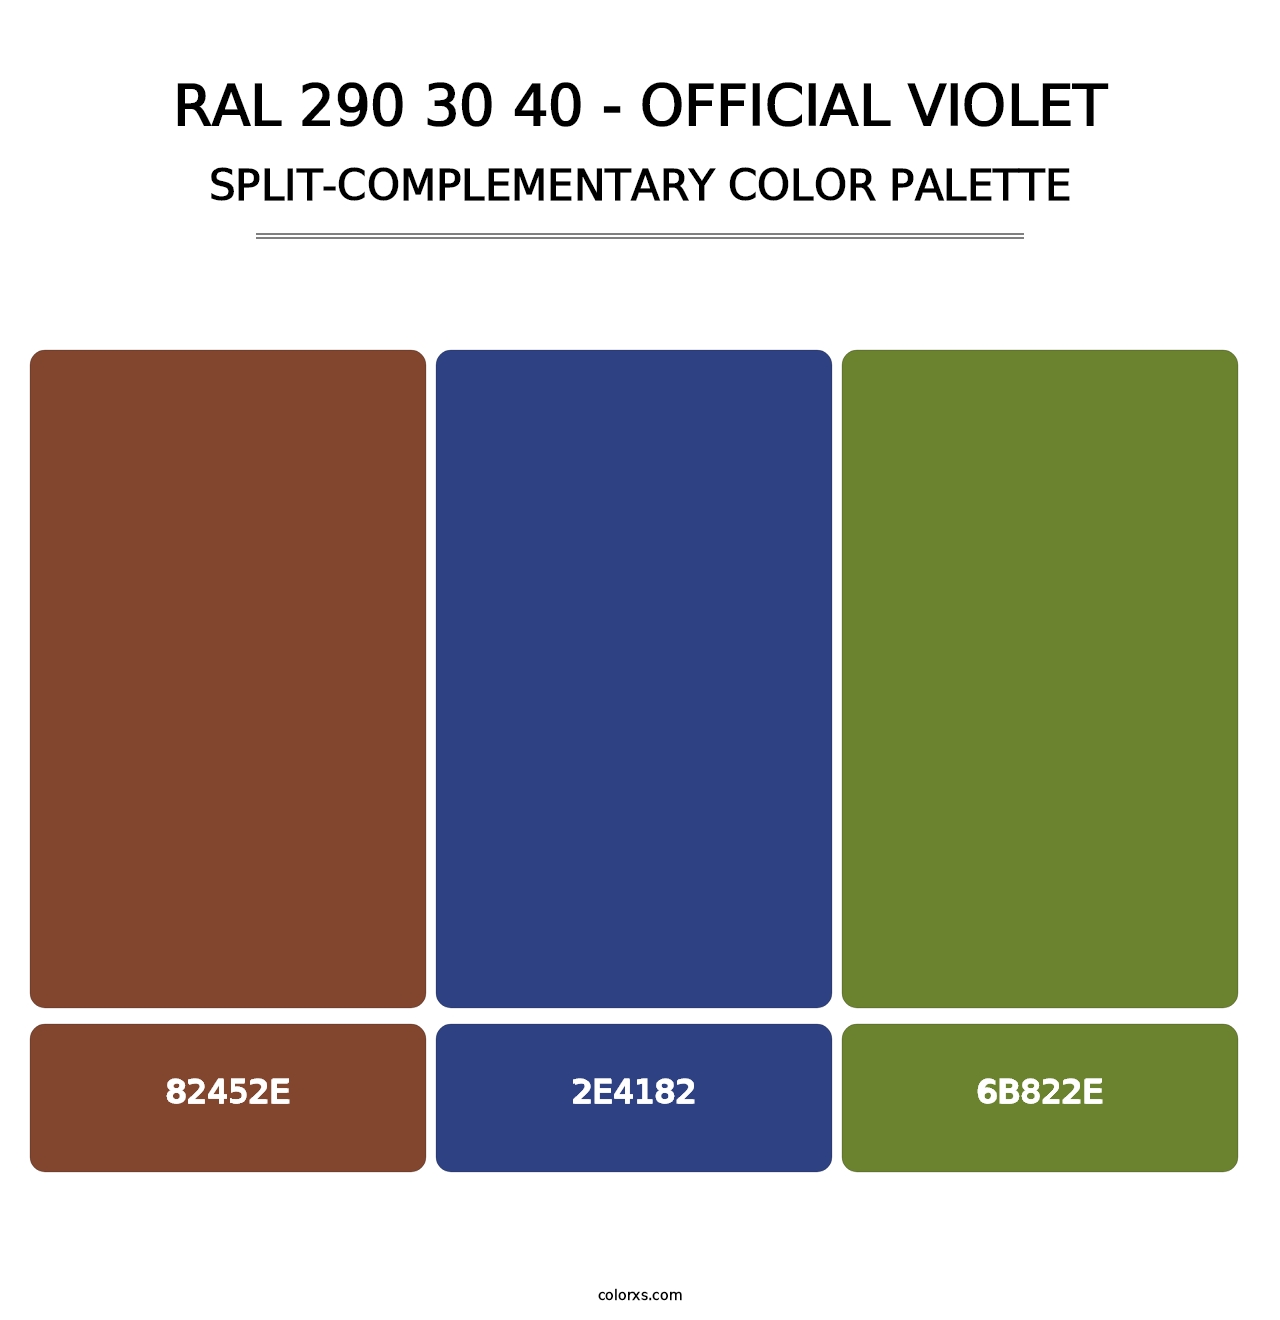 RAL 290 30 40 - Official Violet - Split-Complementary Color Palette